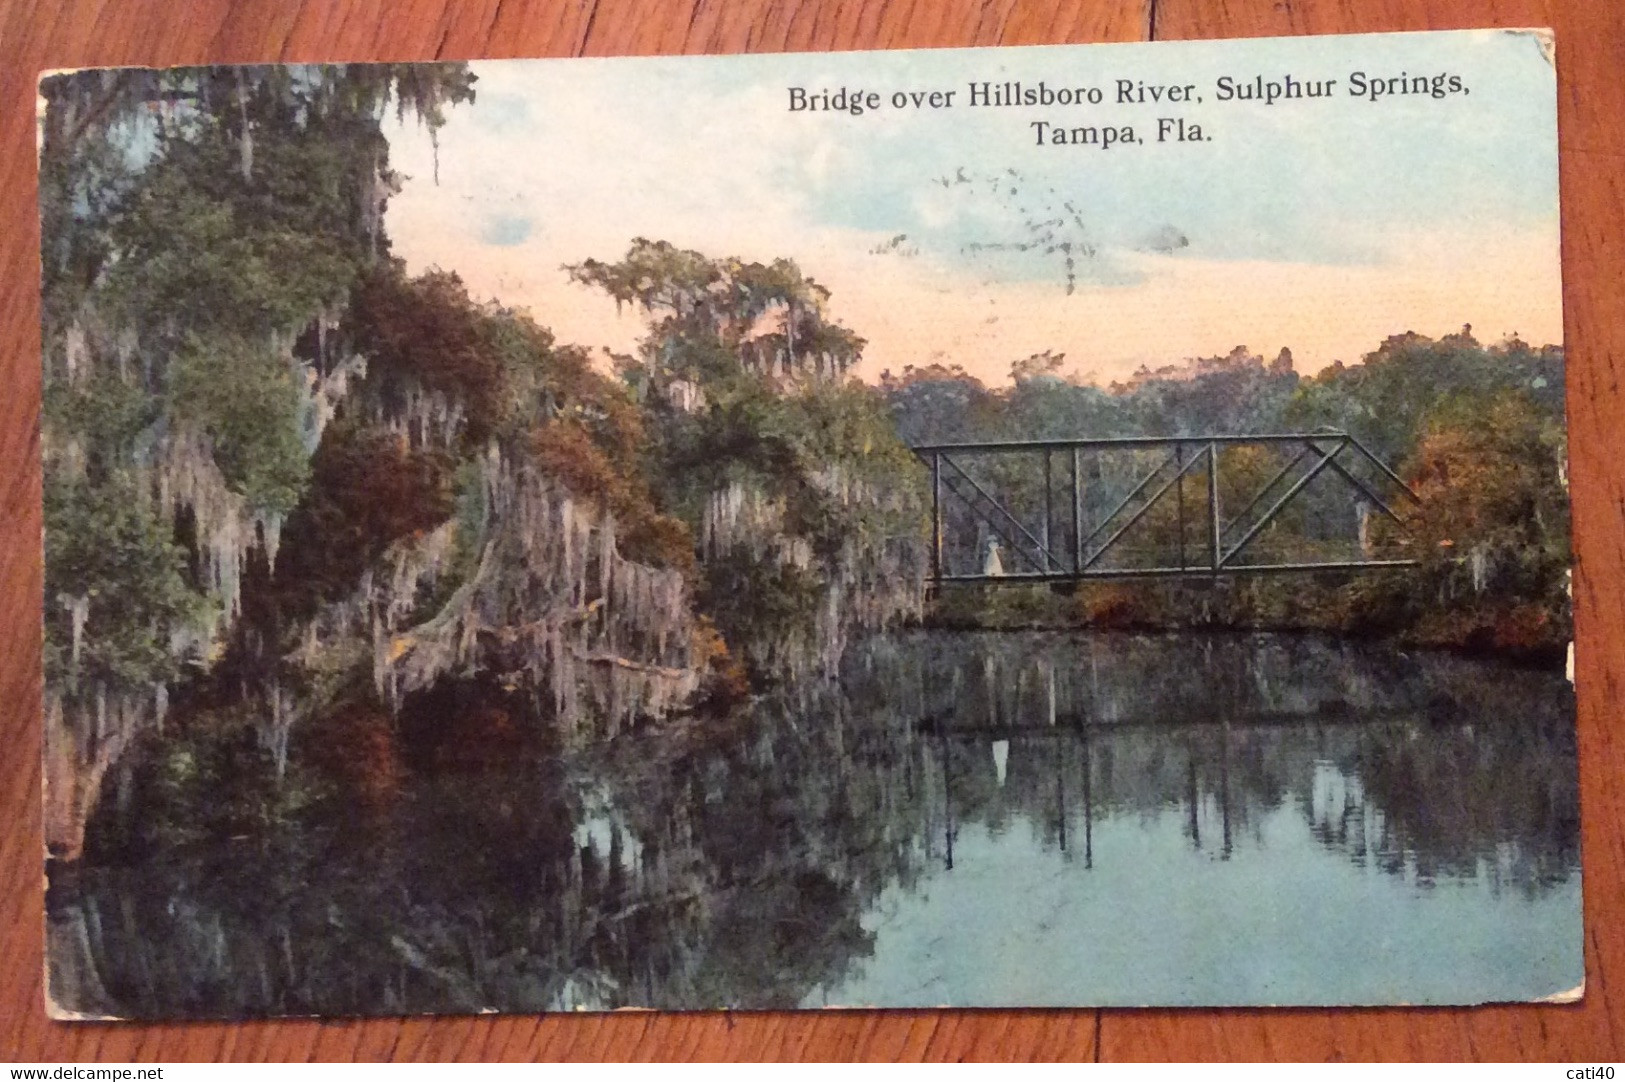 USA - TAMPA,FLA - BRIDGE OVER HILLSBORO RIVER,SULPHUR SPRINGS - VINTAGE POST CARD TAMPA SEP29  1916 - BOLOGNA POSTA ESTE - Fall River